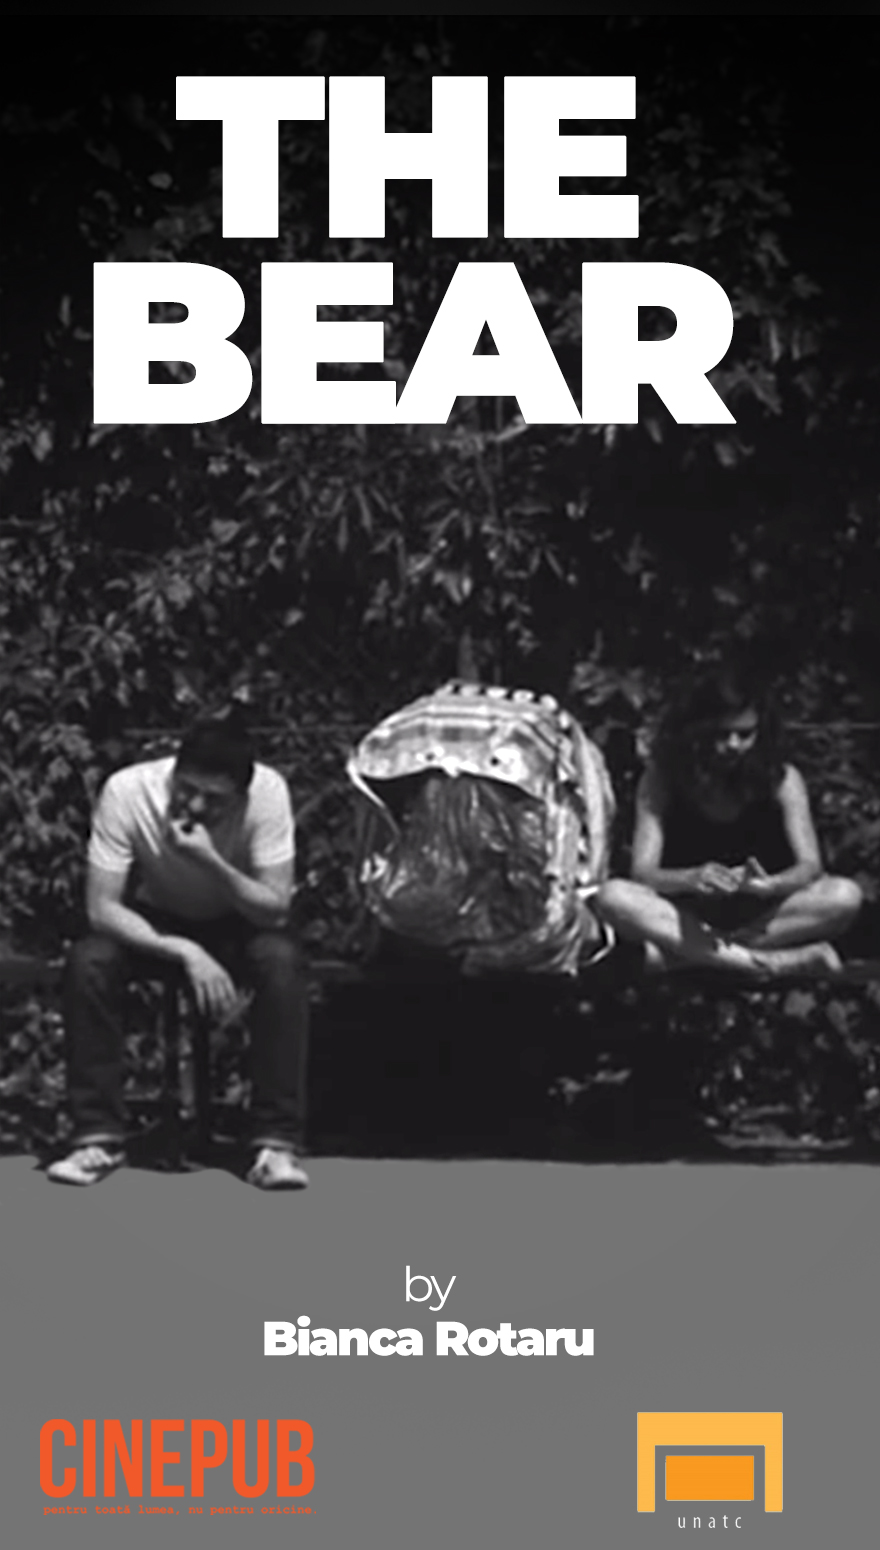 The Bear - student short film online UNATC on CINEPUB